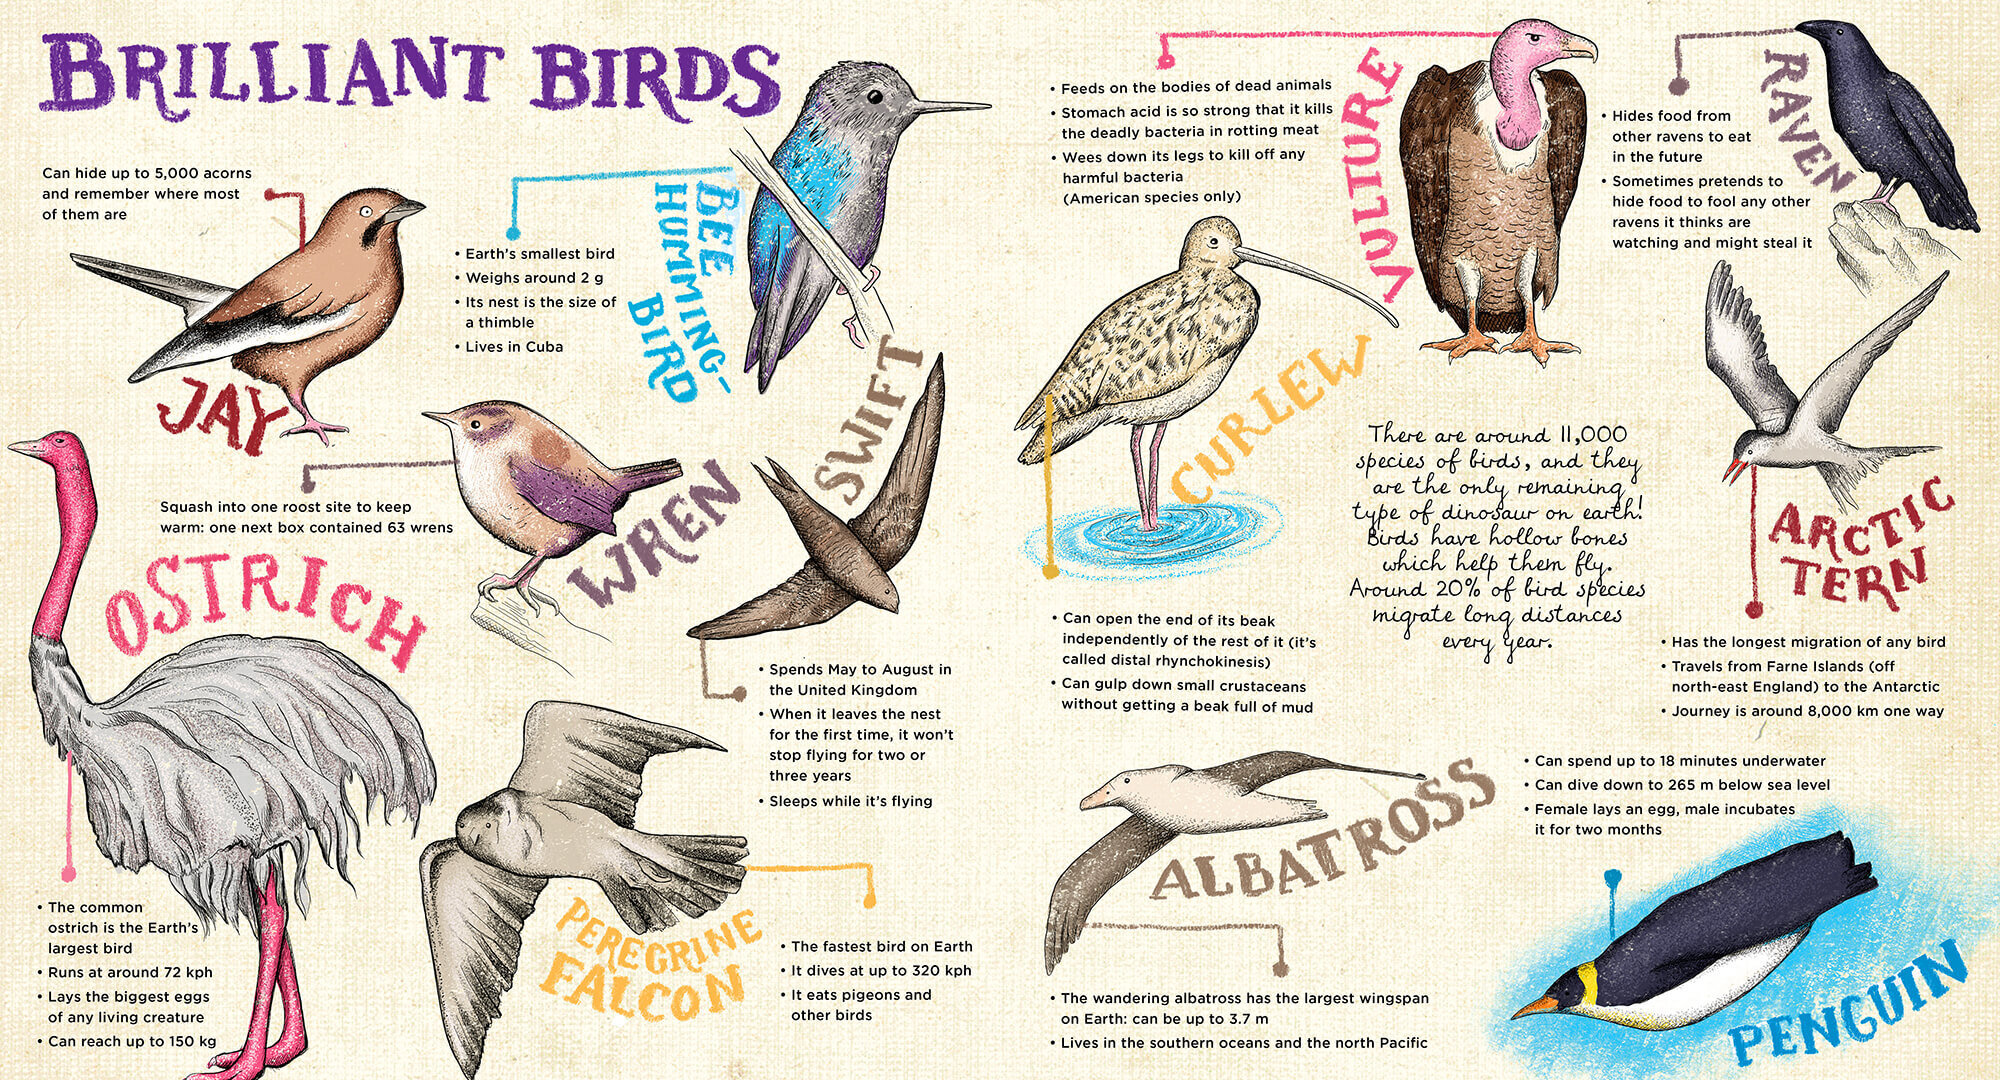 bird+illustration_ornithology+illustrator_lisa+maltby.jpg